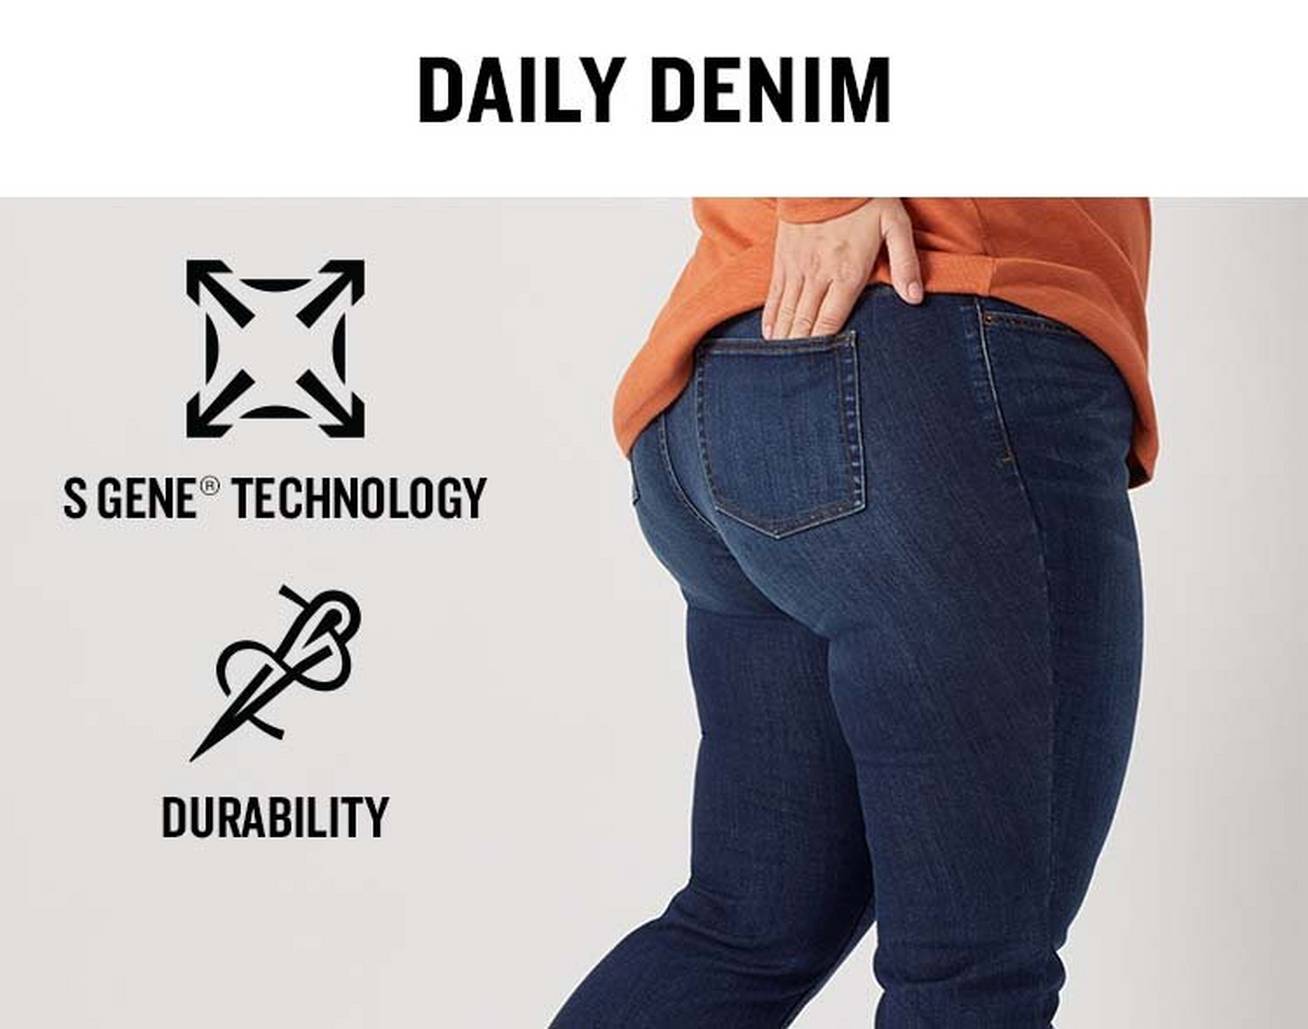 Daily Denim. S Gene (R) Technology. Durability